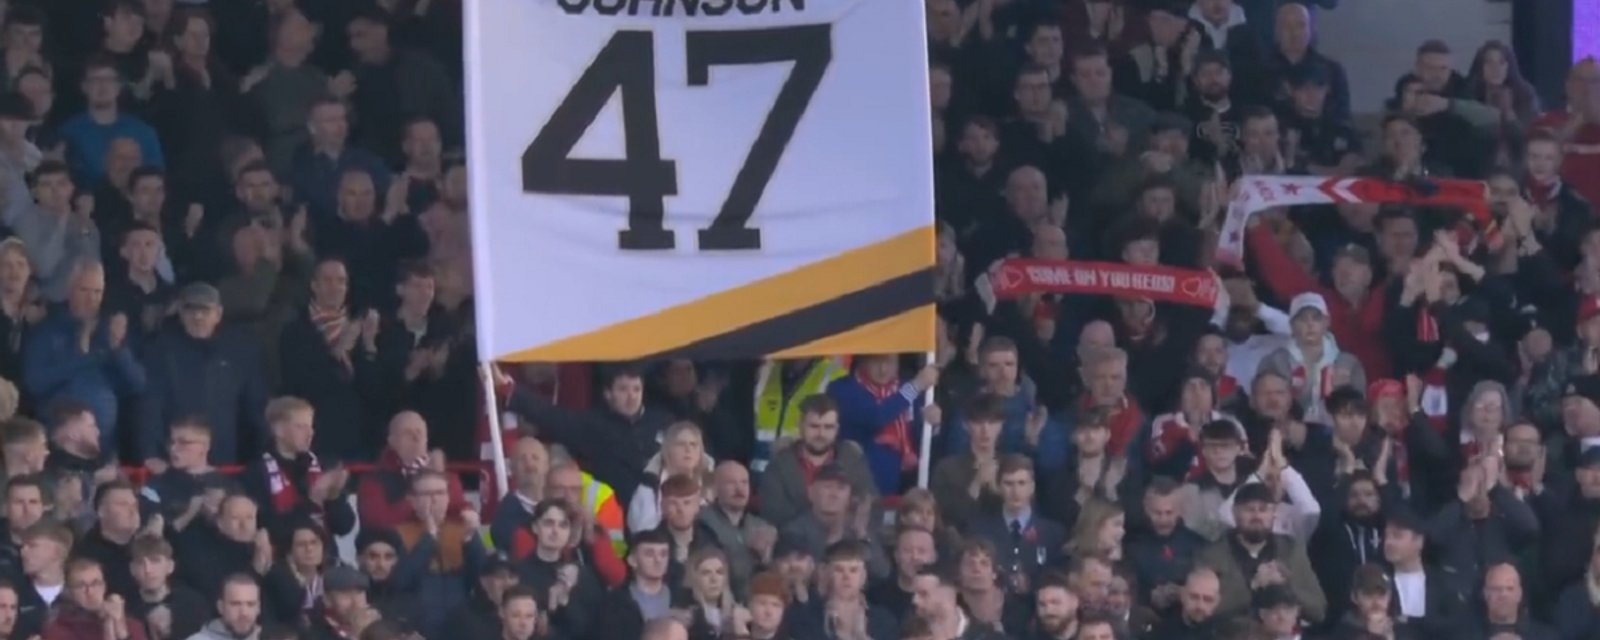 Premier League soccer team pays tribute to Adam Johnson.